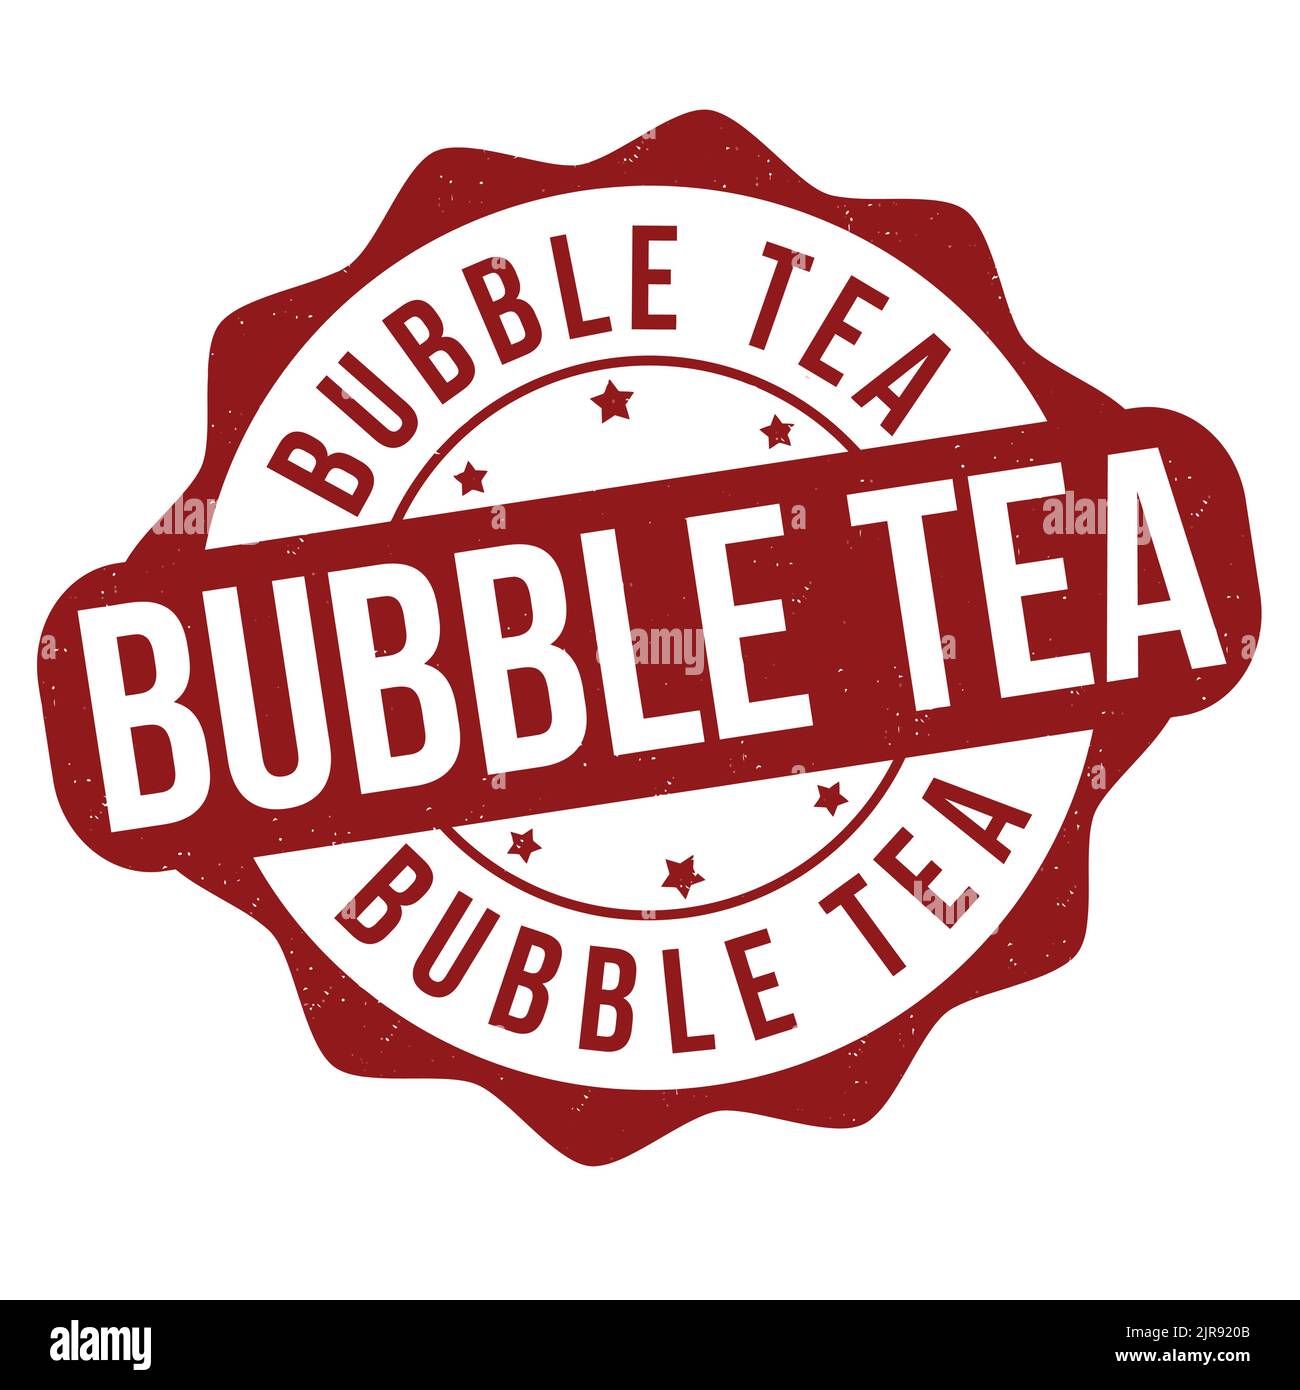 Bubble tea grunge rubber stamp on white background, vector illustration Stock Vector